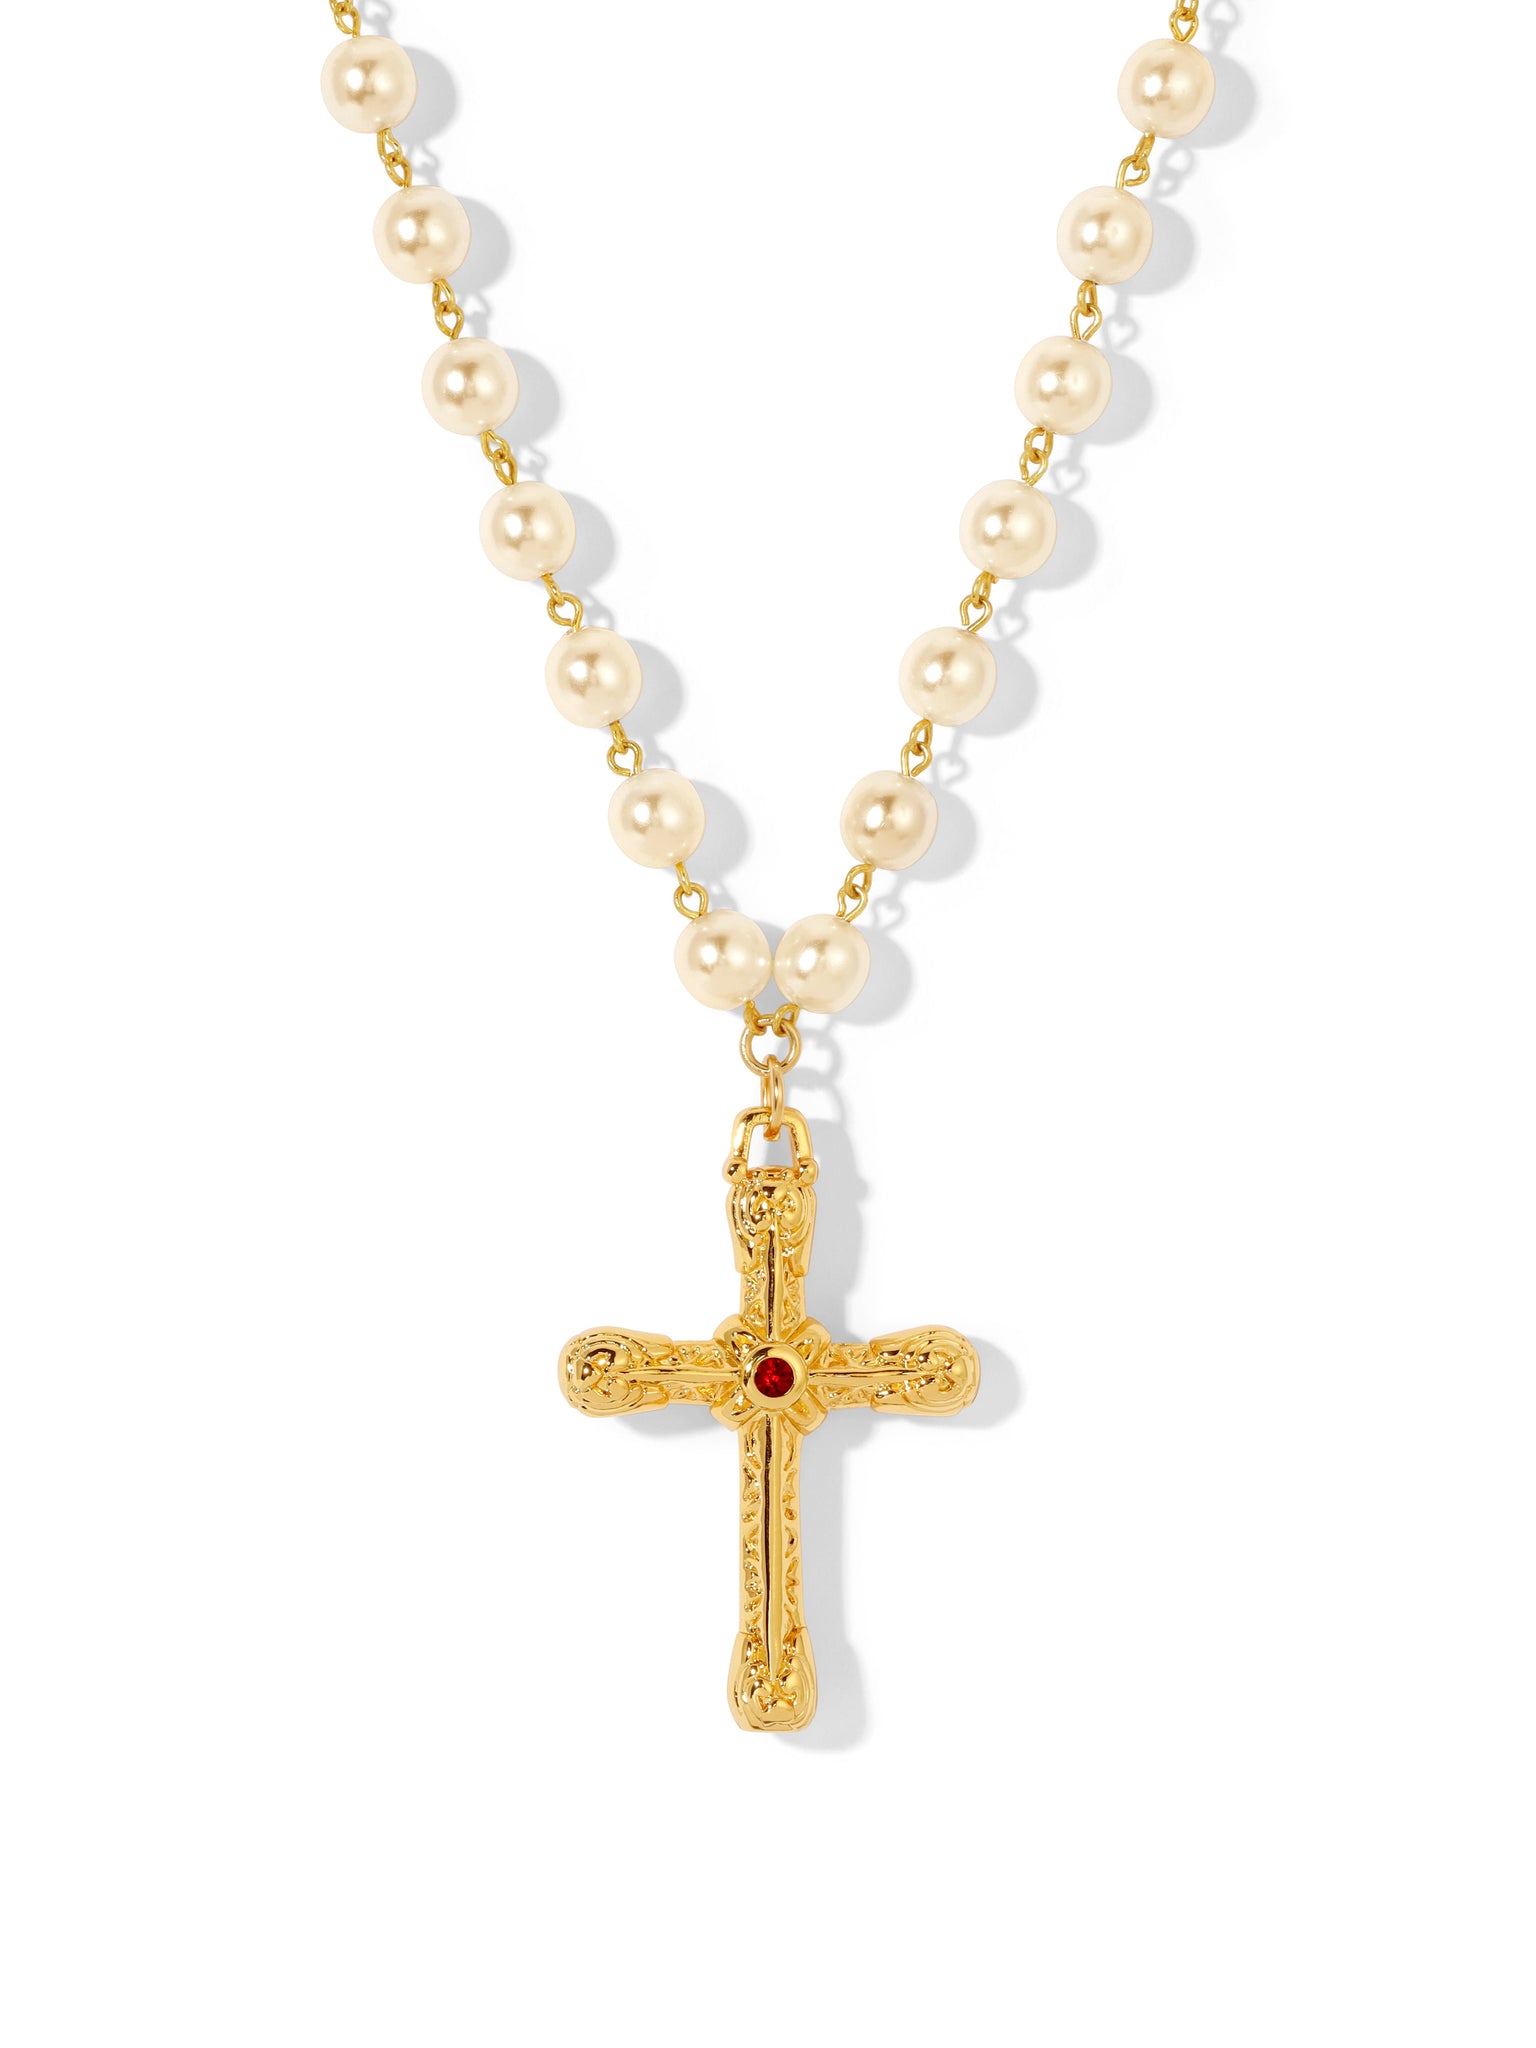 The Nova Pearl Cross Necklace